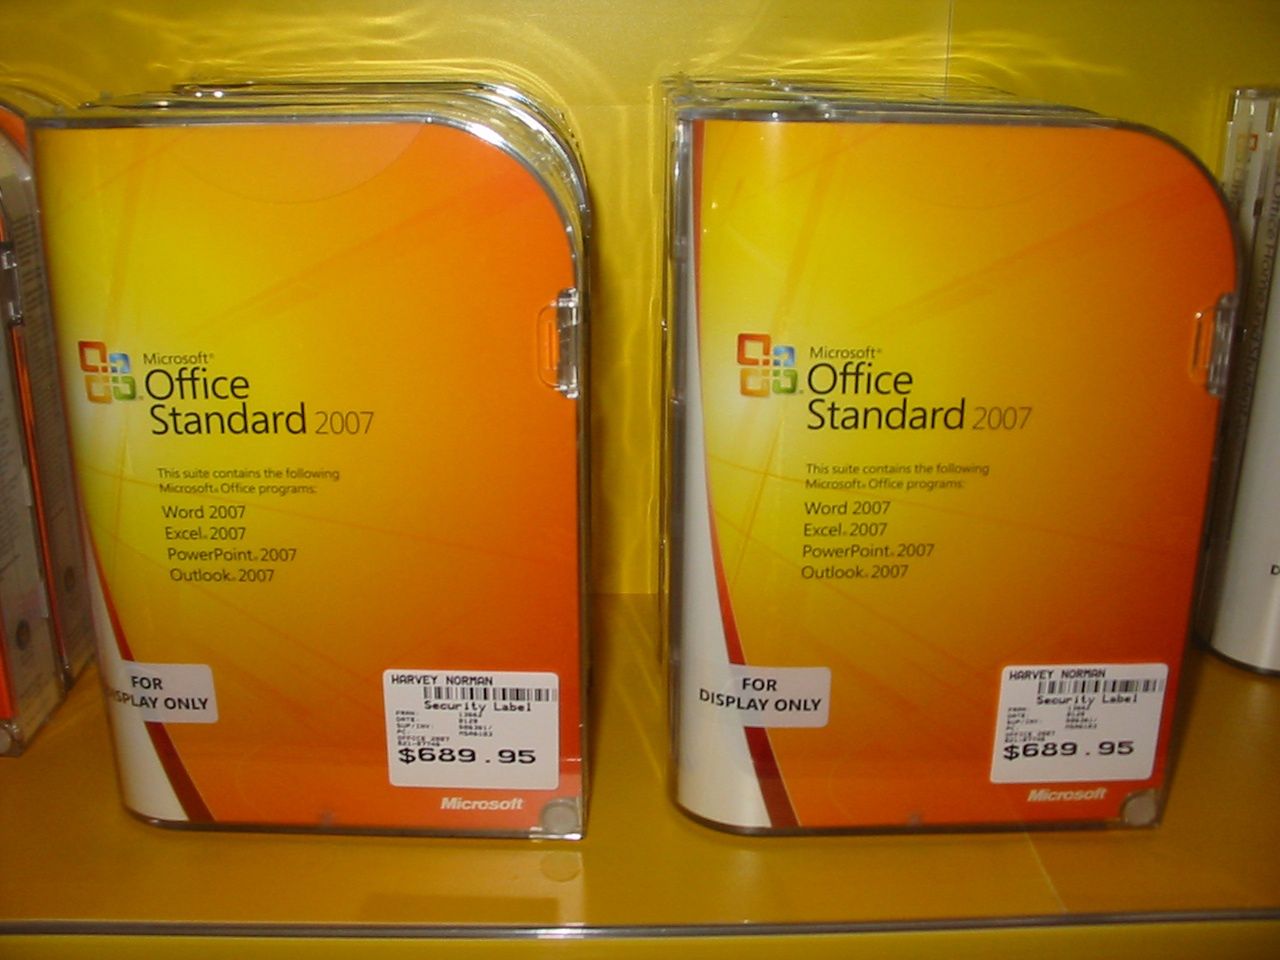 Office 2007 (CC BY-SA 2.0)